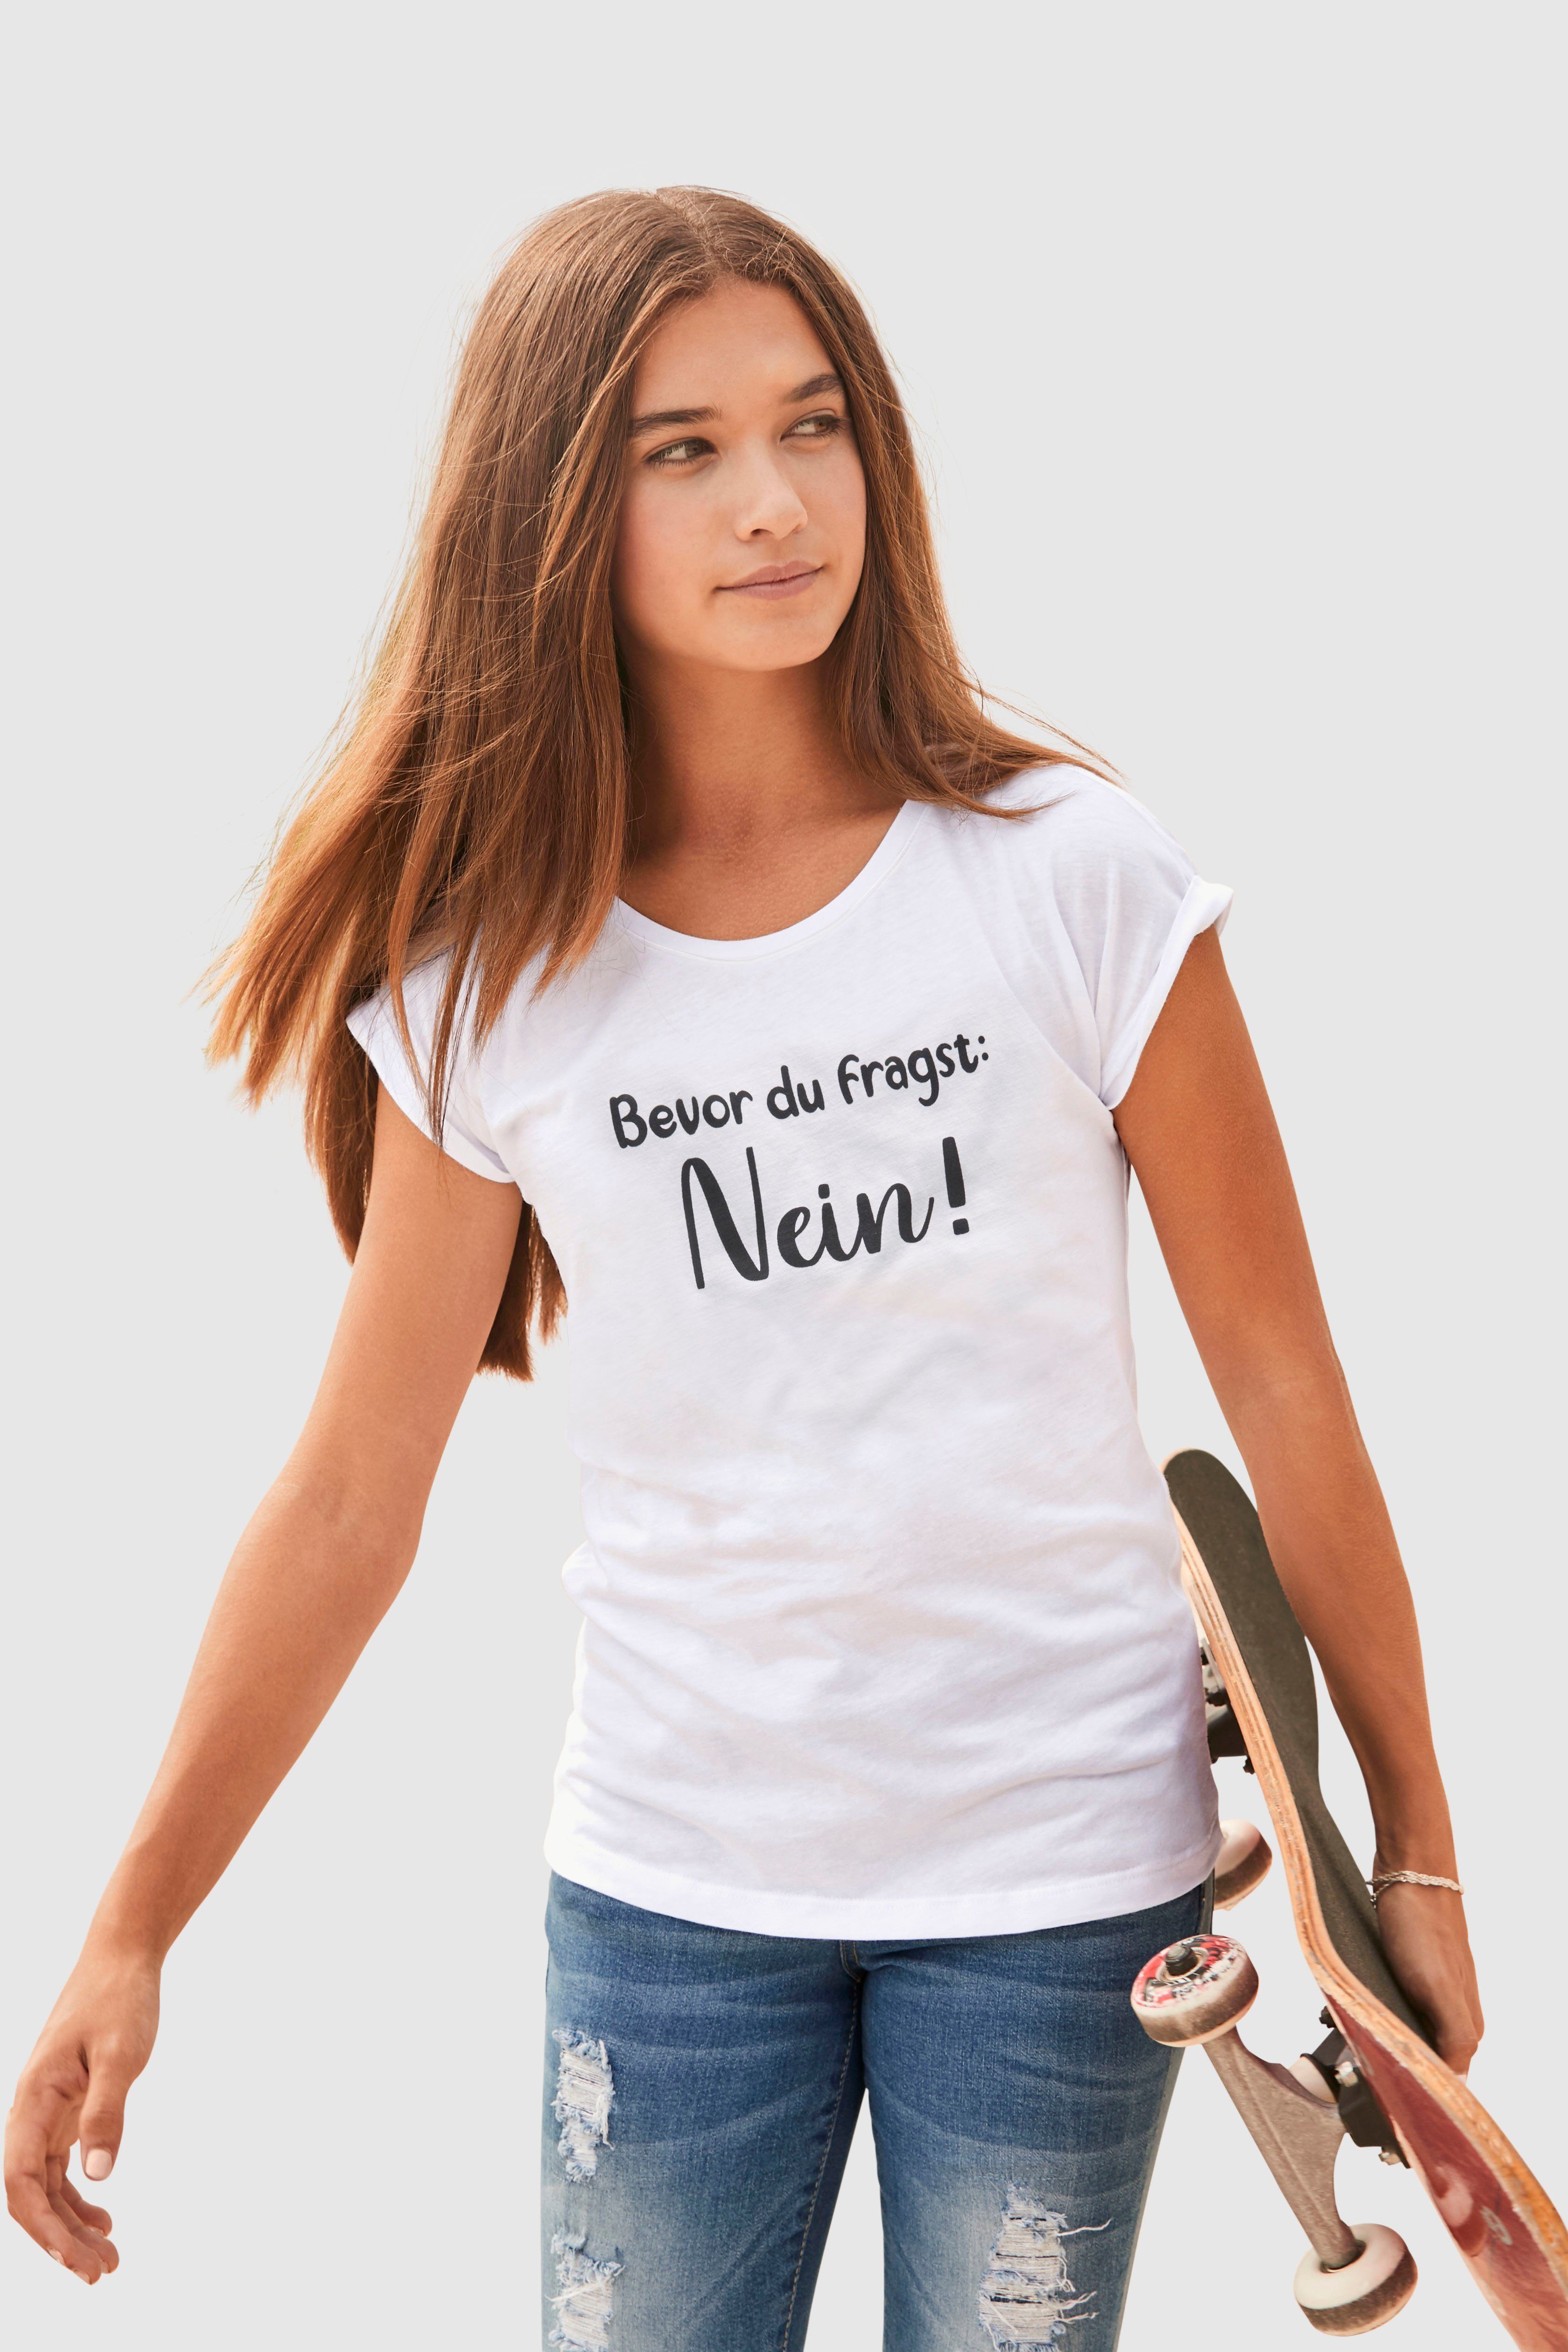 KIDSWORLD T-Shirt Bevor Du Form in legerer fragst: NEIN! weiter